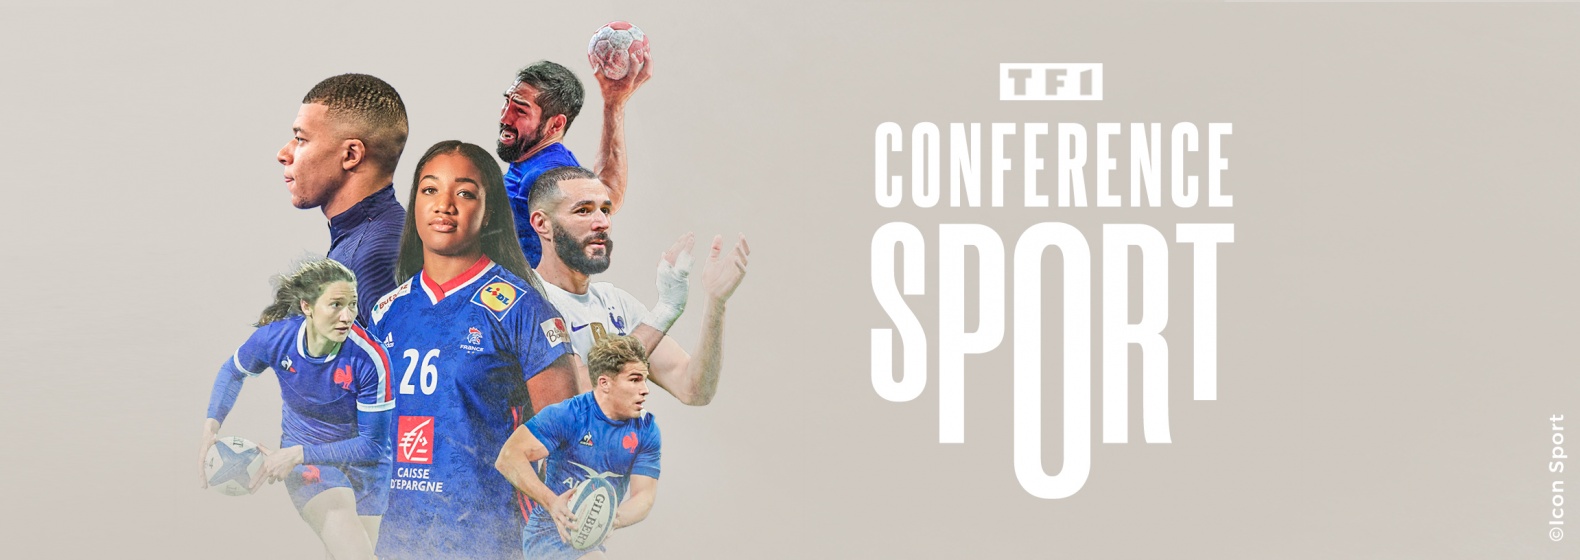 conference_sport_header.jpg